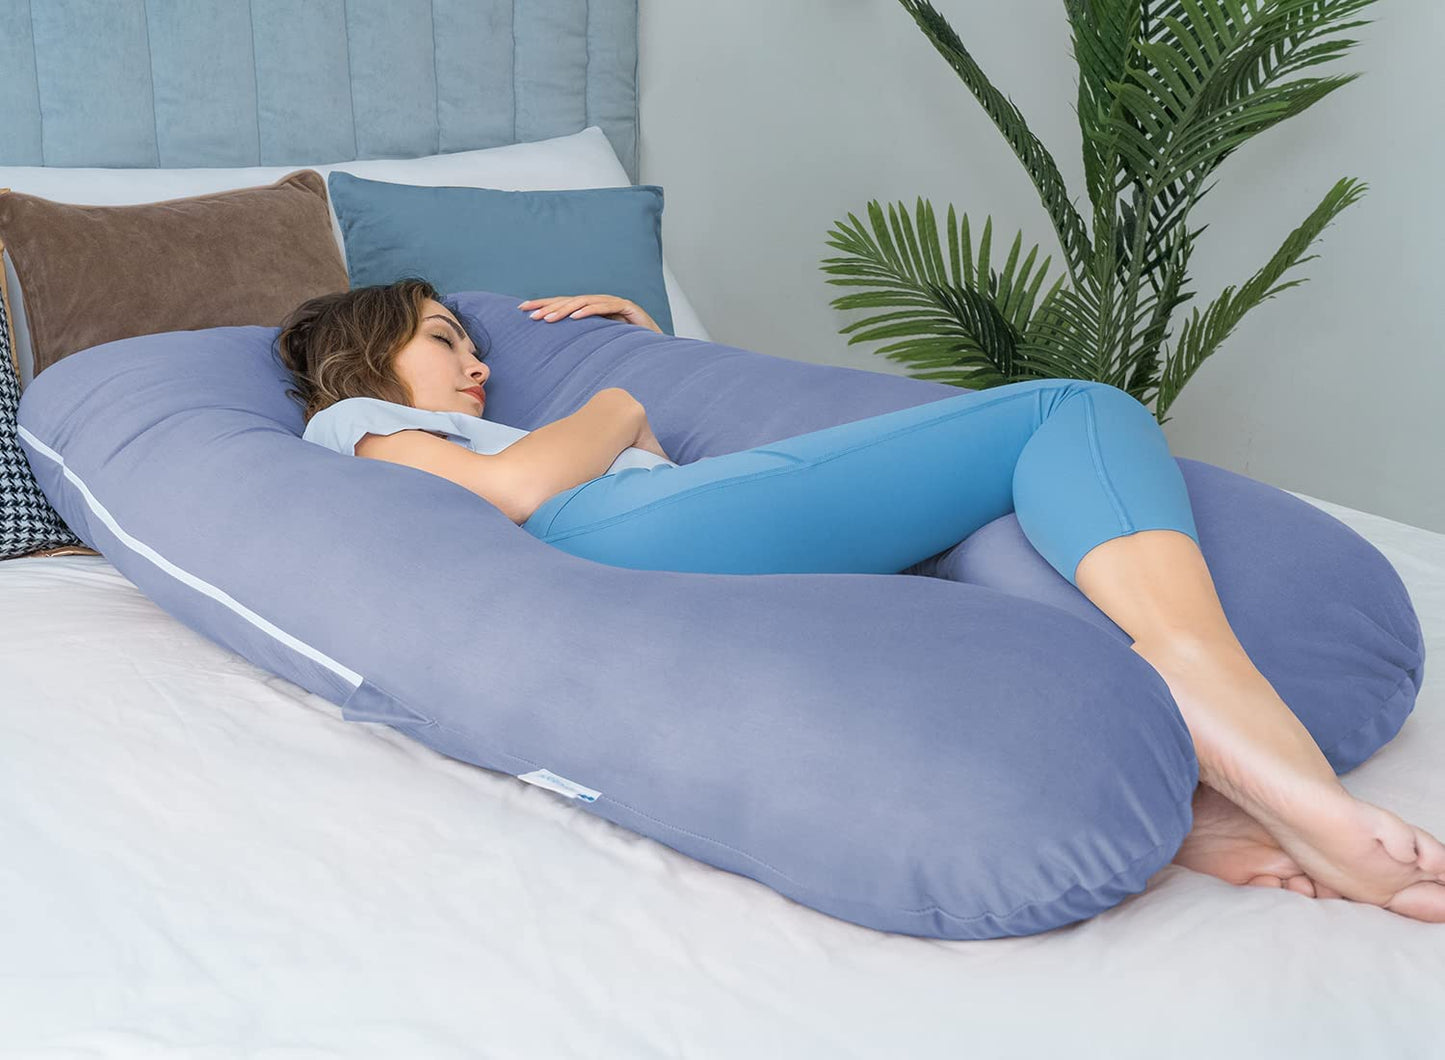 Pregnancy Support Pillow / Maternity Pillow / Sleeping Support Pillow Sky Blue